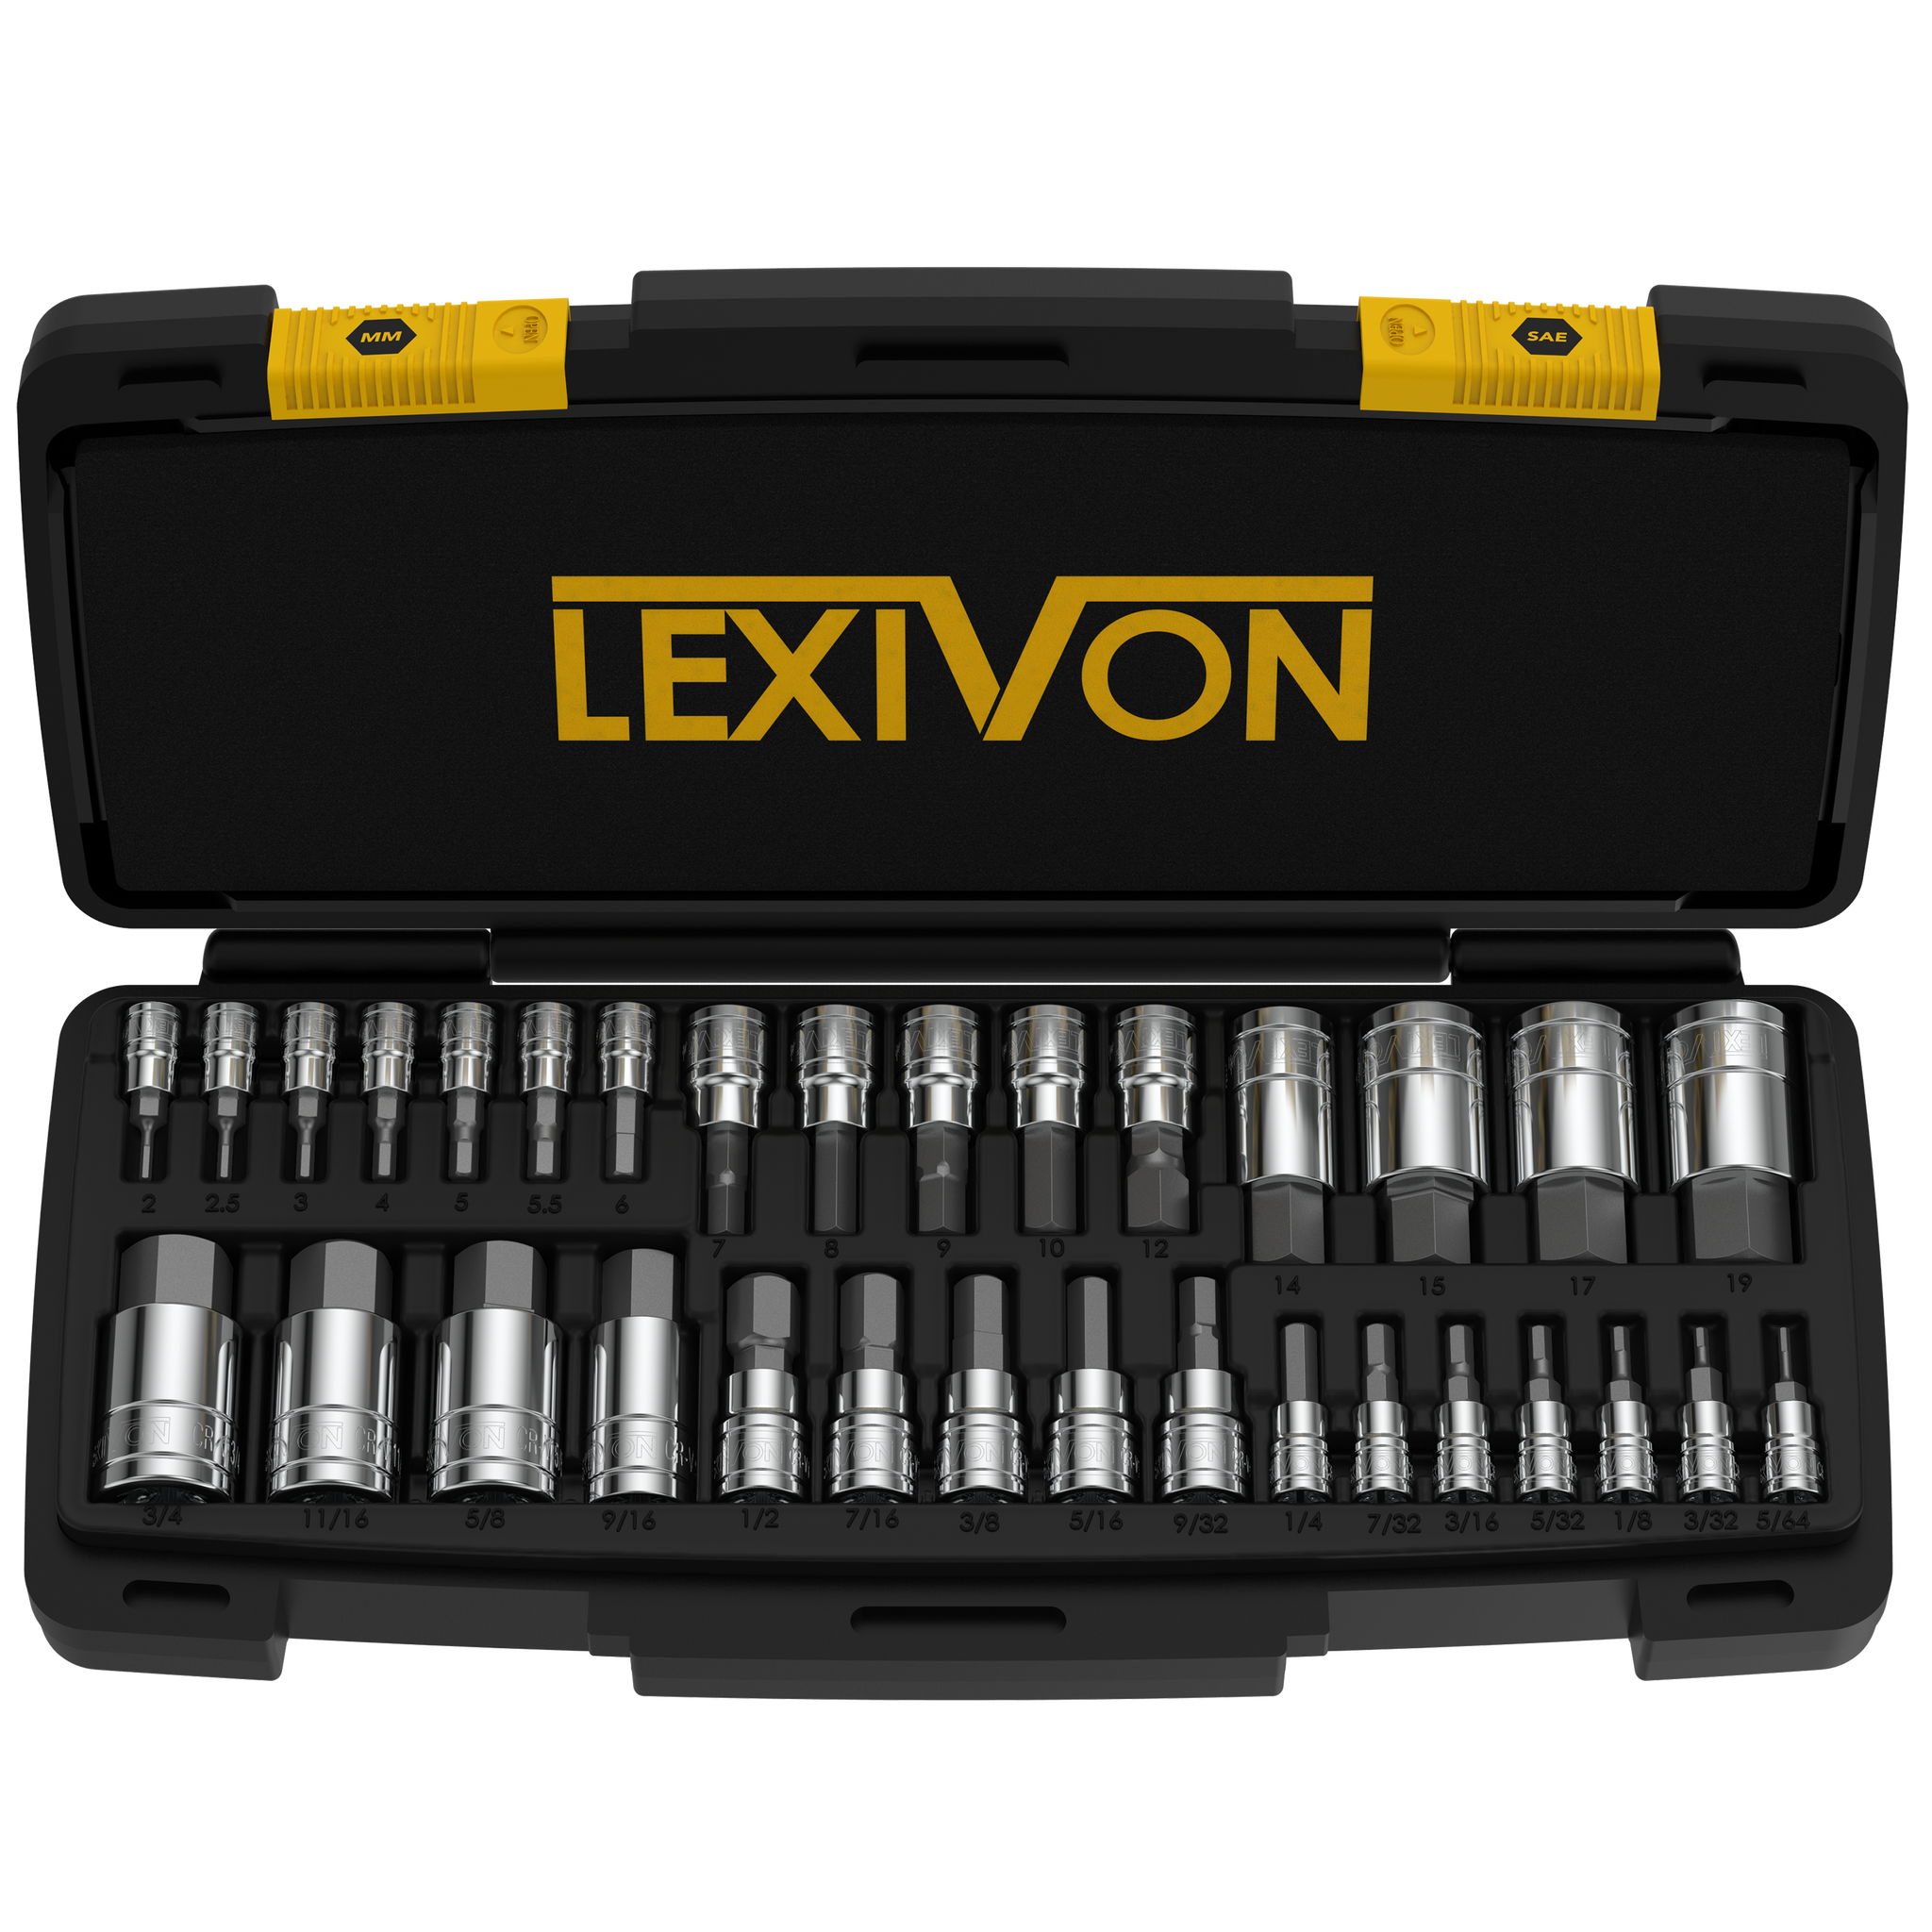 LEXIVON Master HEX Bit Socket Set, Premium S2 Alloy Steel